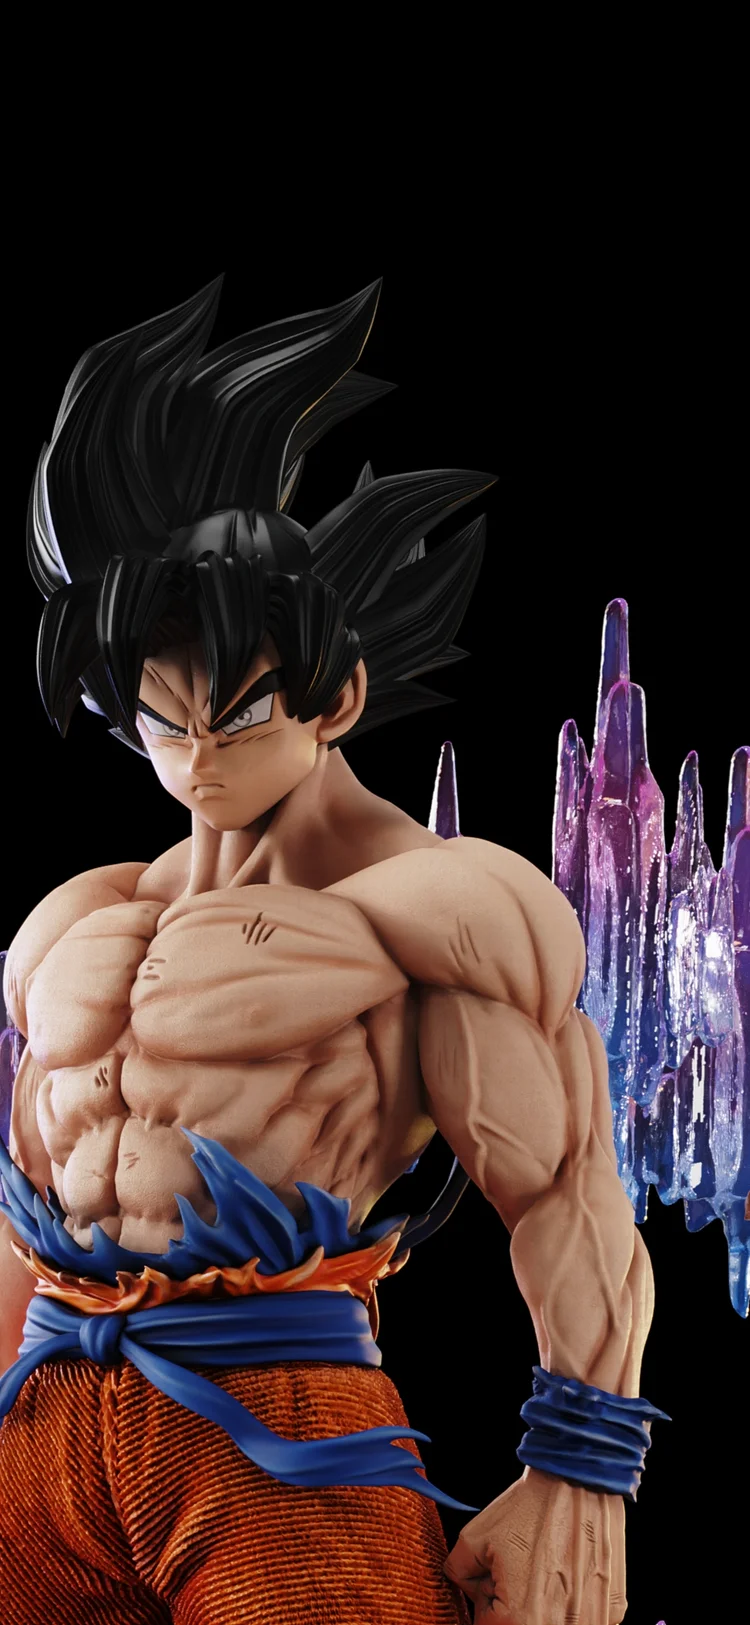 30cm Goku Dragon Ball Figure Ssj4 Son Goku Action Figure Gk Super